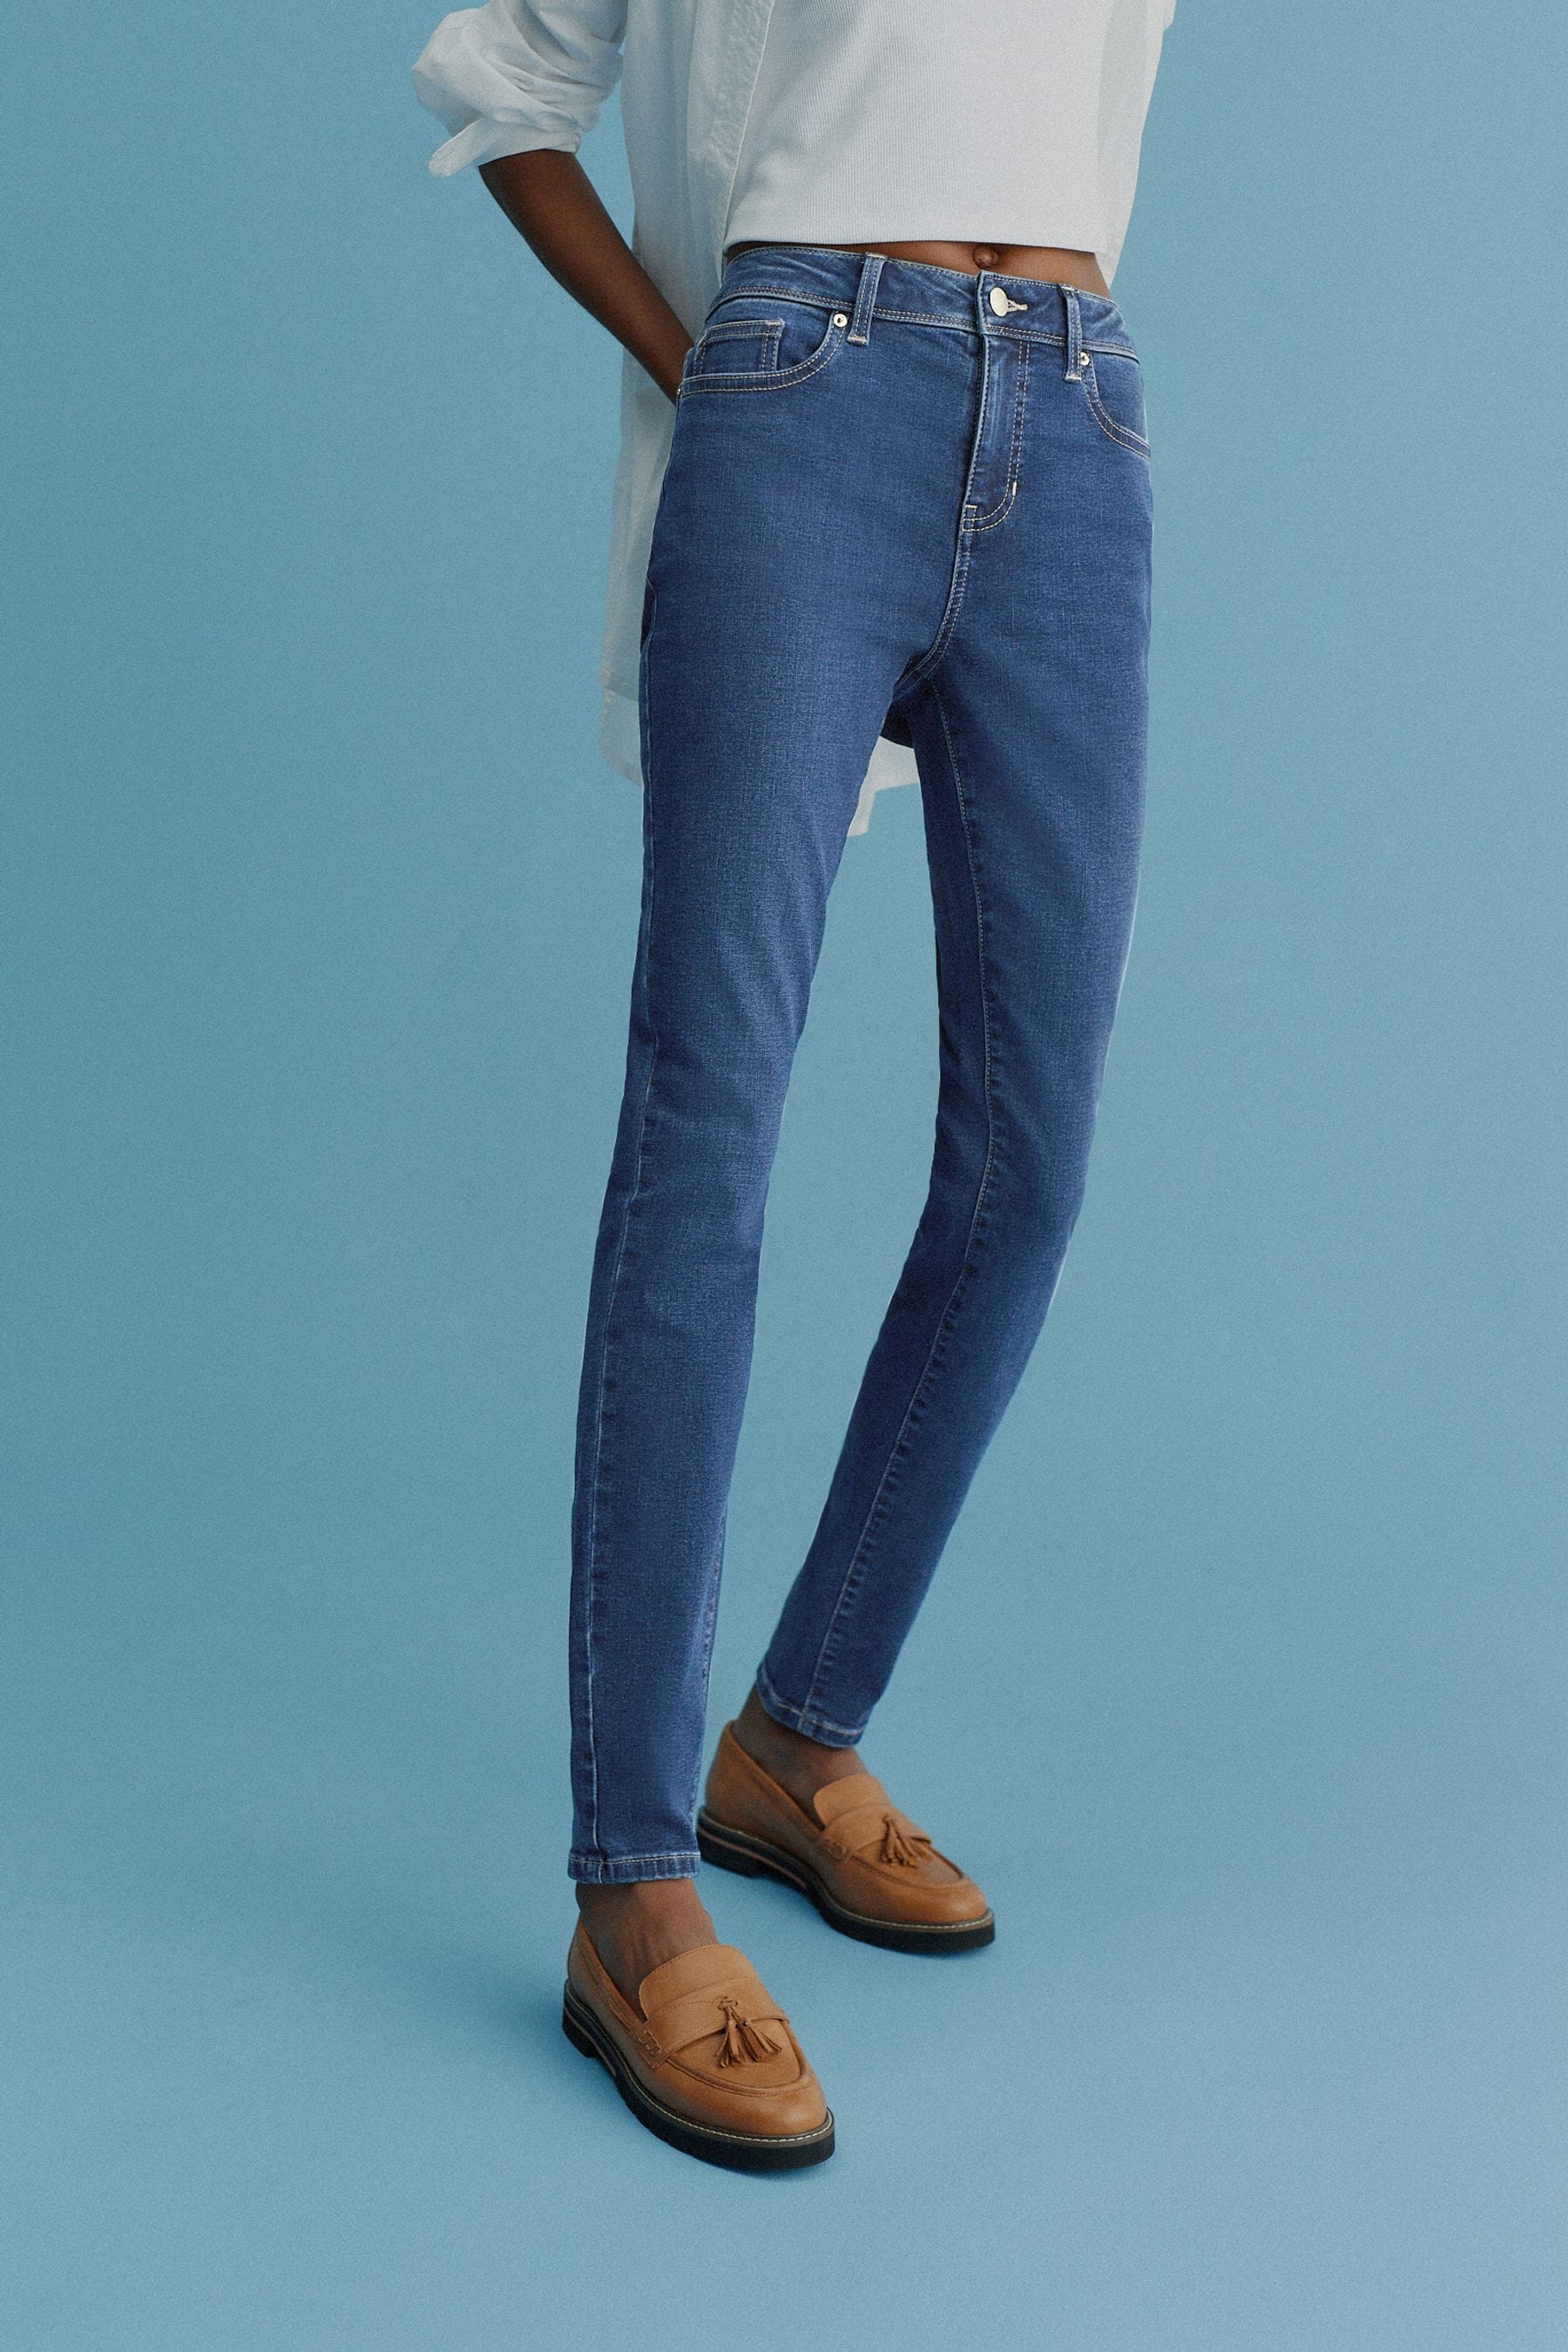 Buy Skinny Jeans from Next Ireland